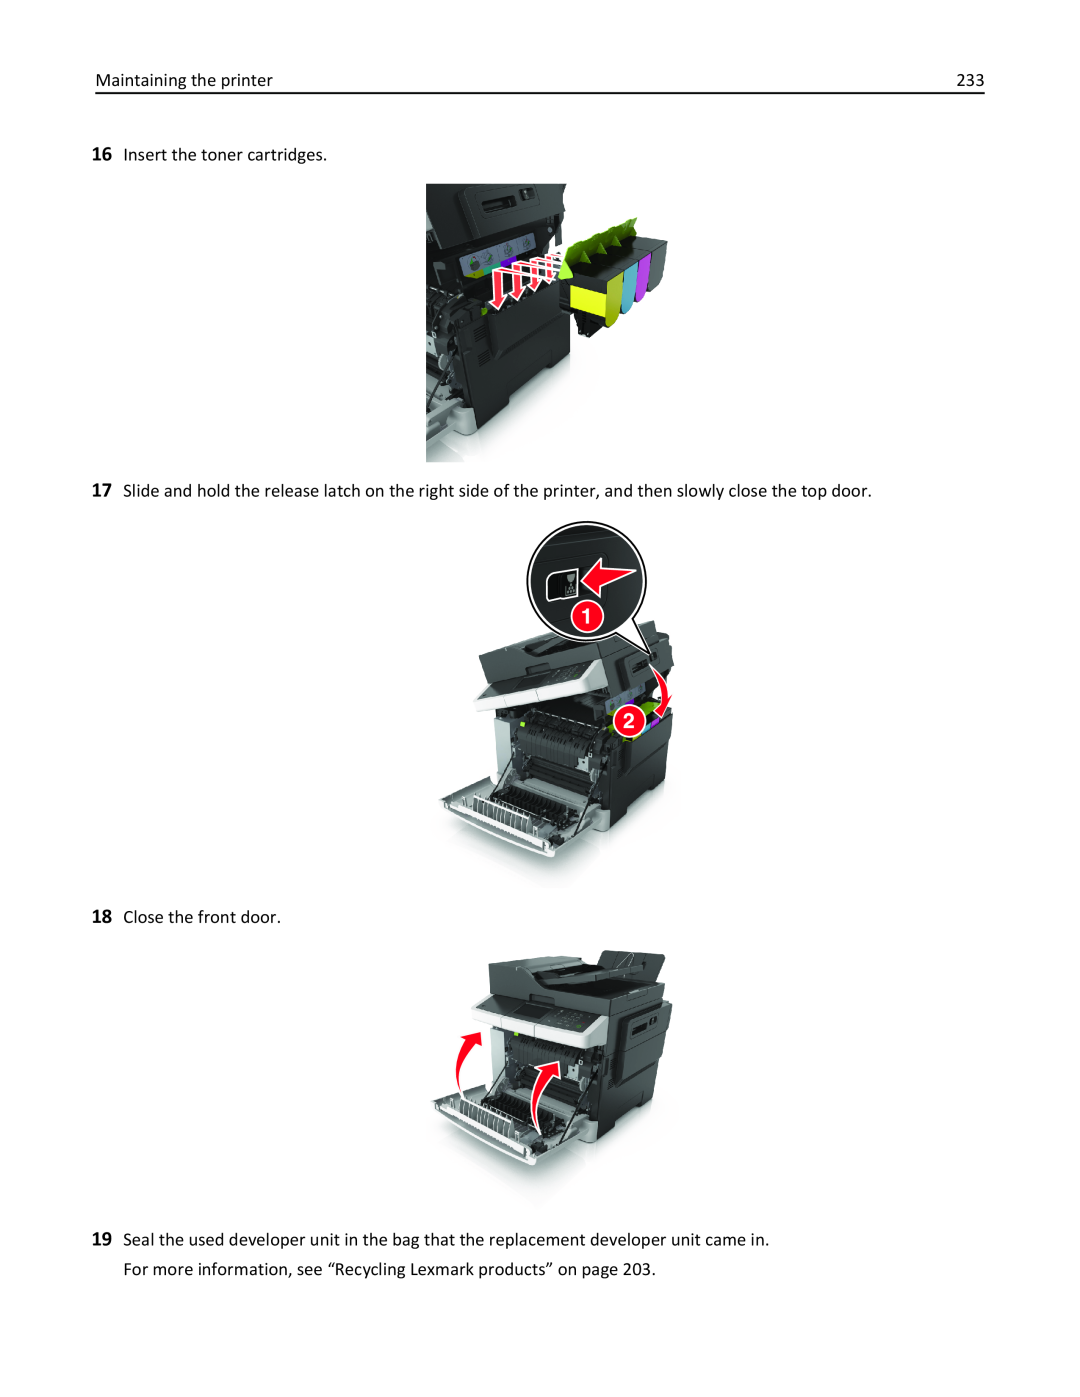 Lexmark 436 manual Maintaining the printer, Insert the toner cartridges, Close the front door 